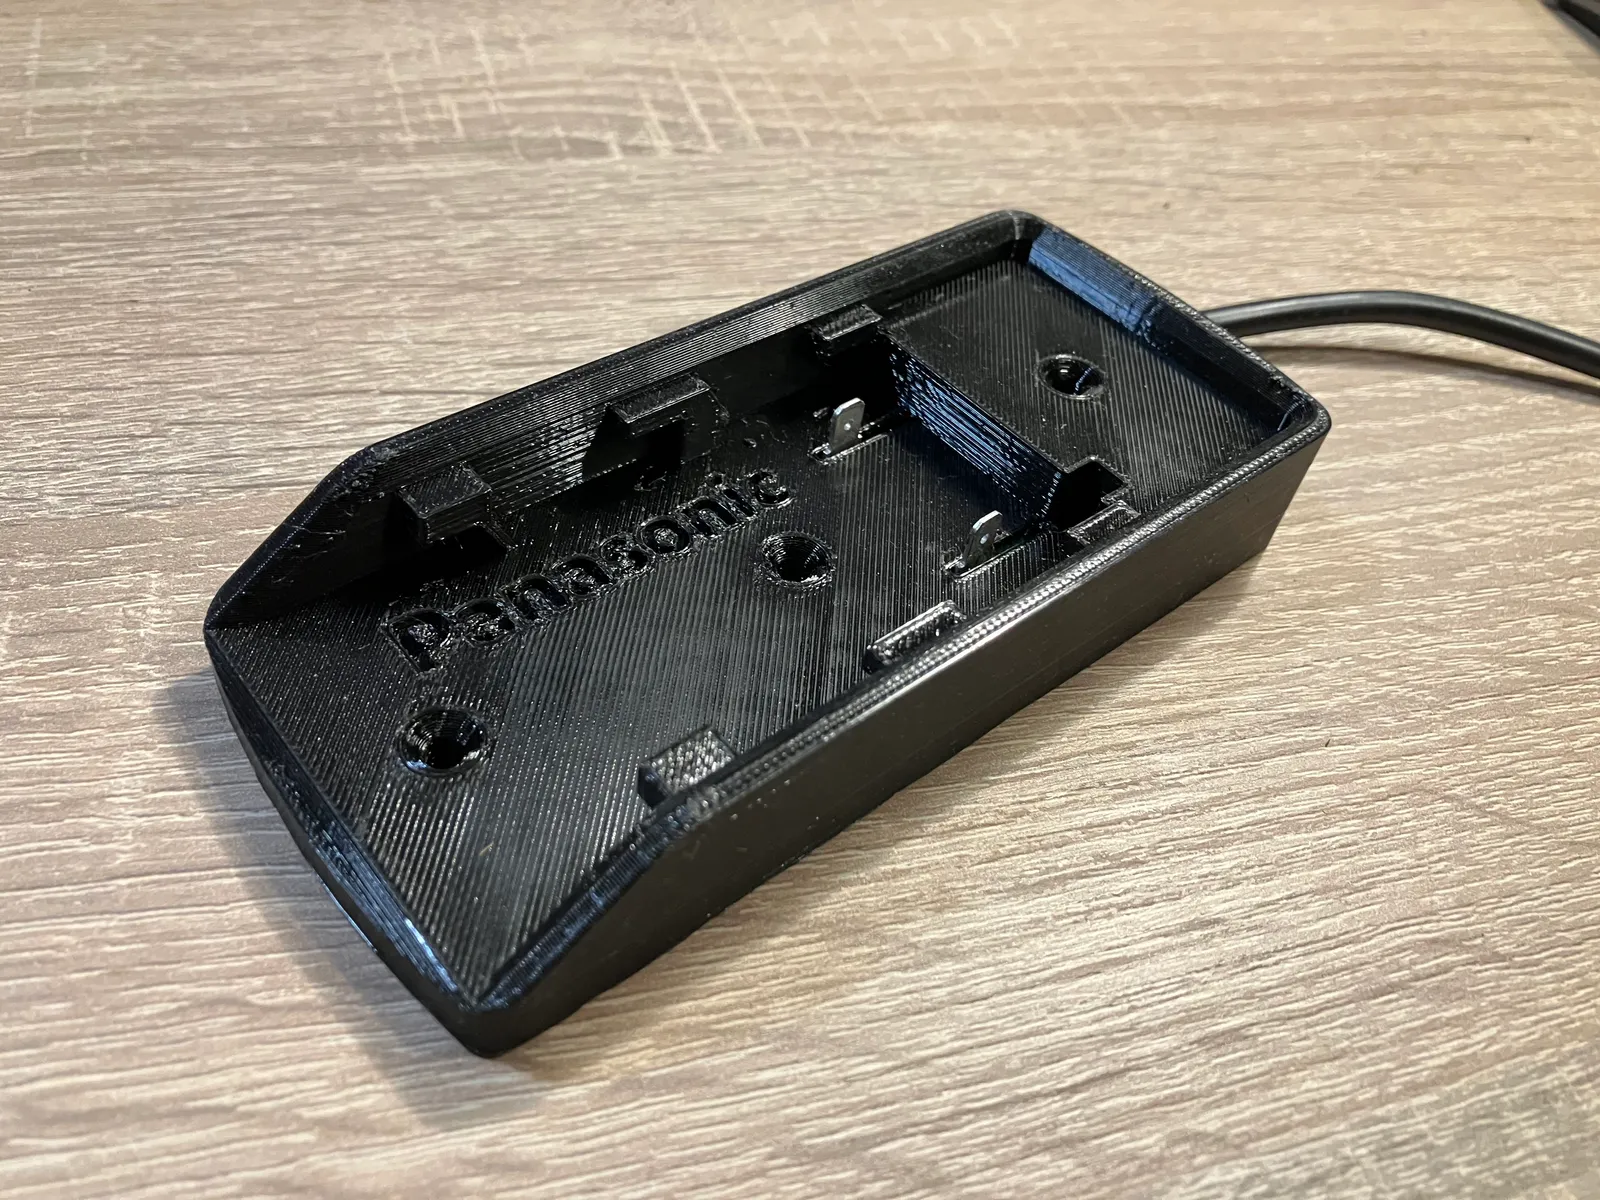  Panasonic EY powertool battery adapter